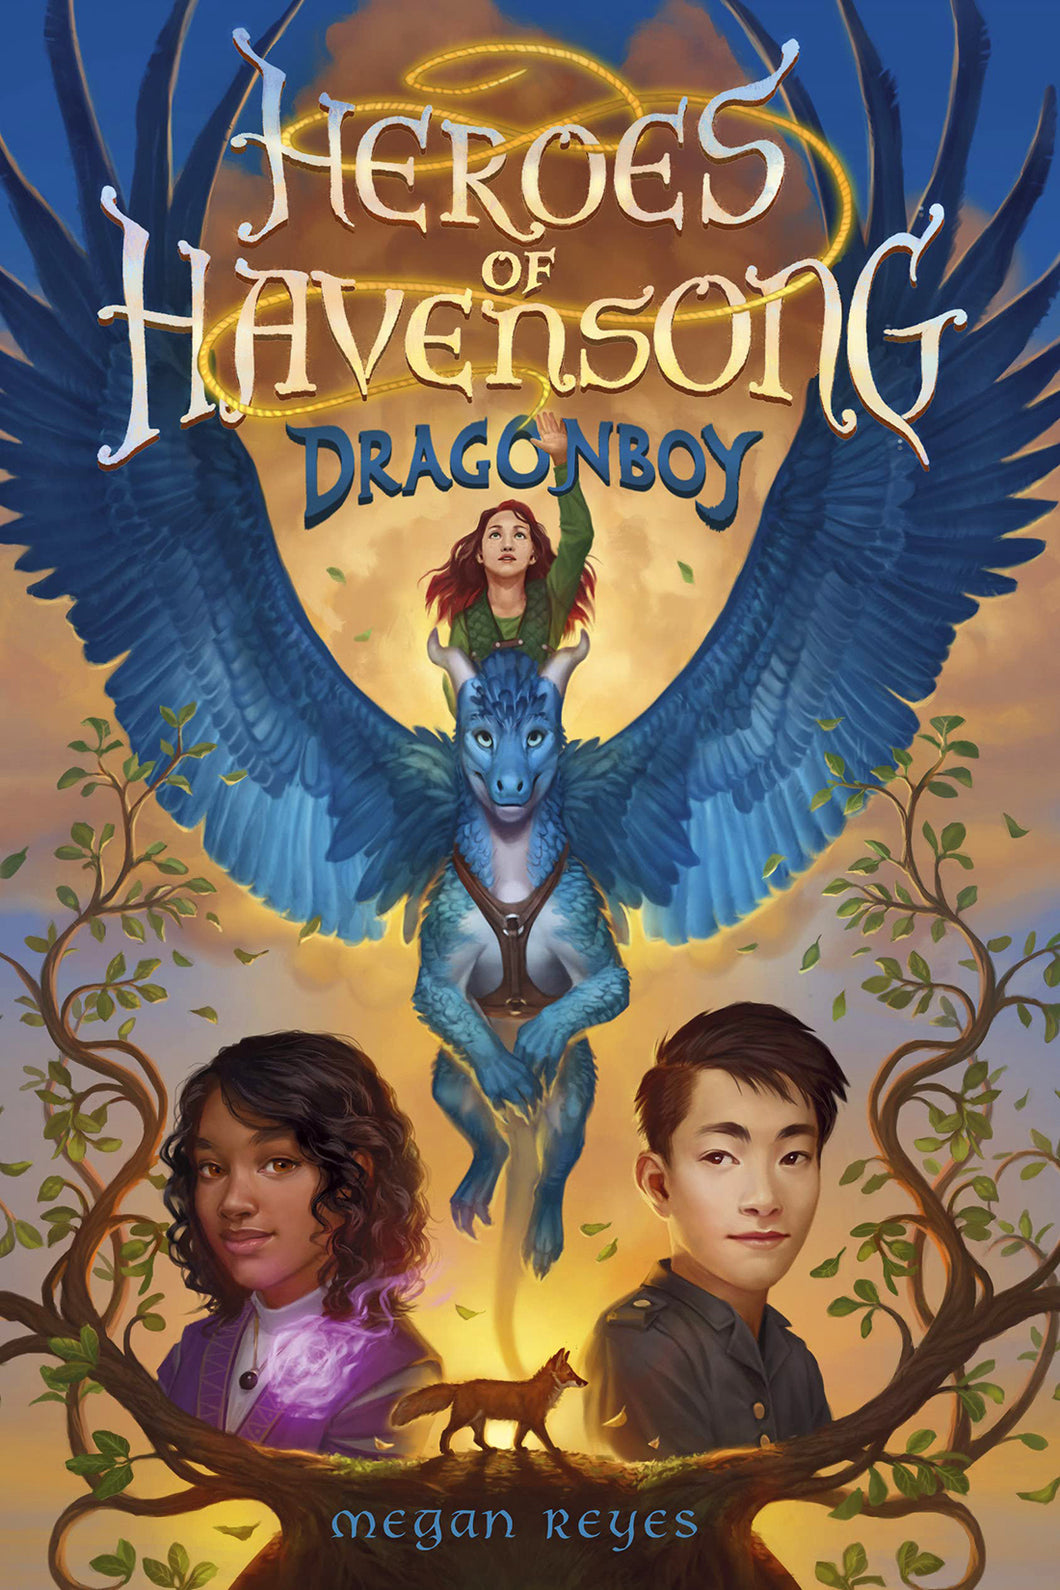 Heroes of Havensong: Dragonboy by Megan Reyes / Hardcover or Paperback - NEW BOOK